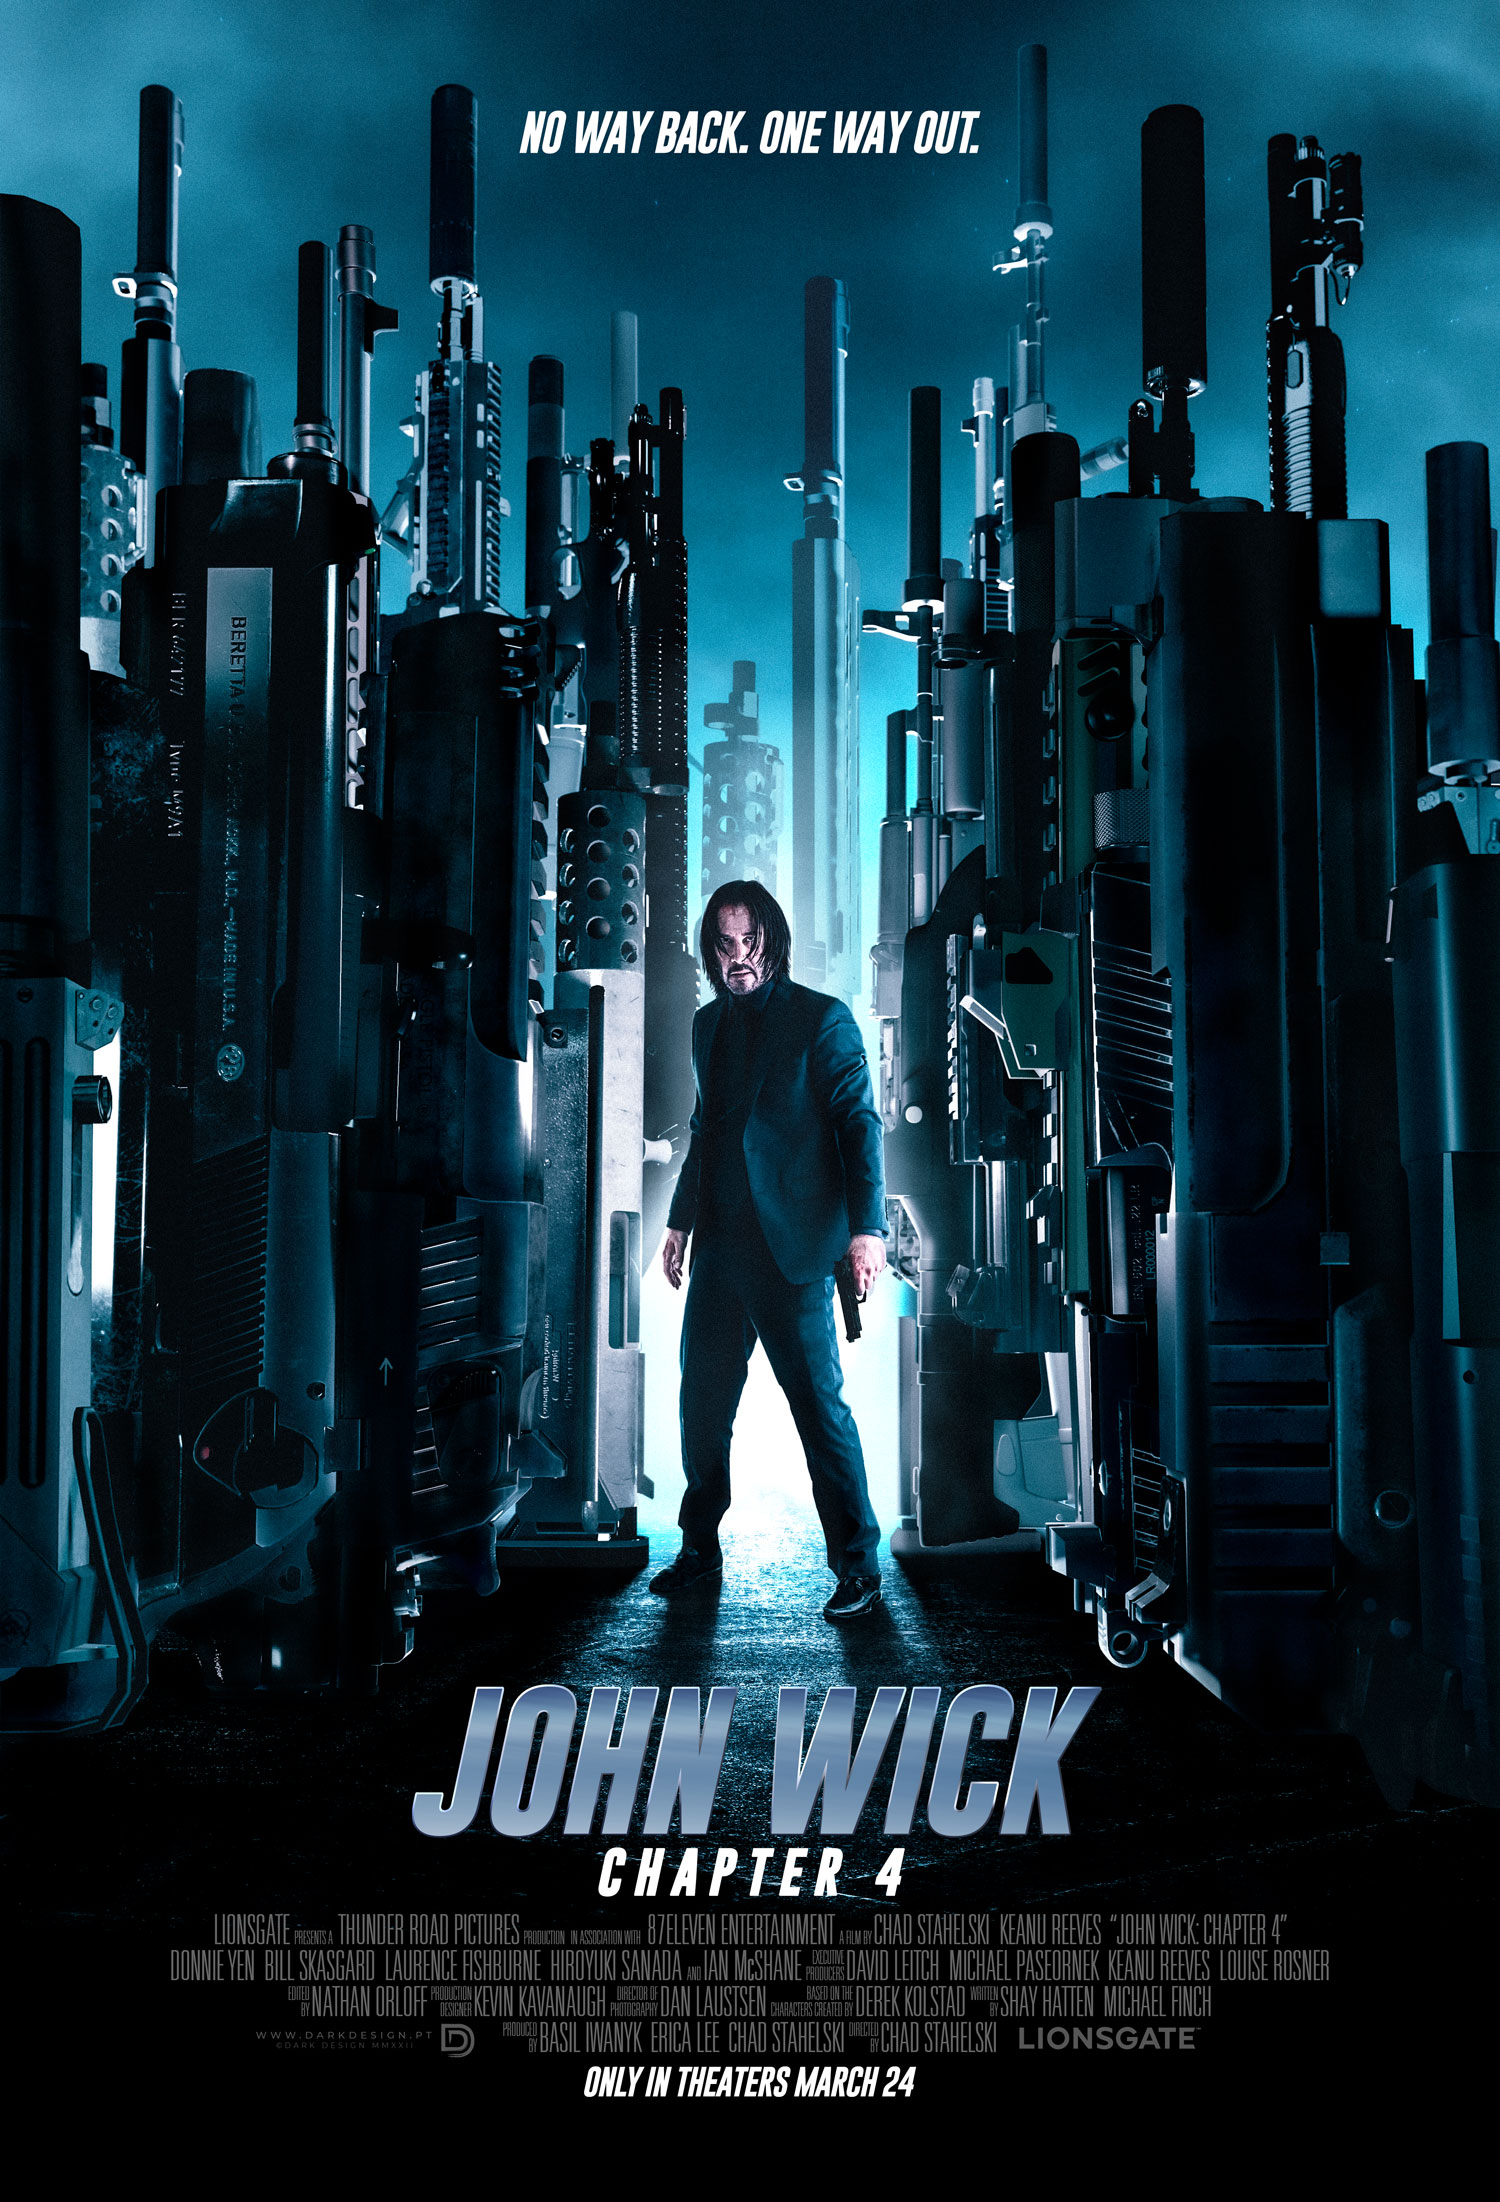 John Wick Chapter 4 Darkdesign Posterspy 7643